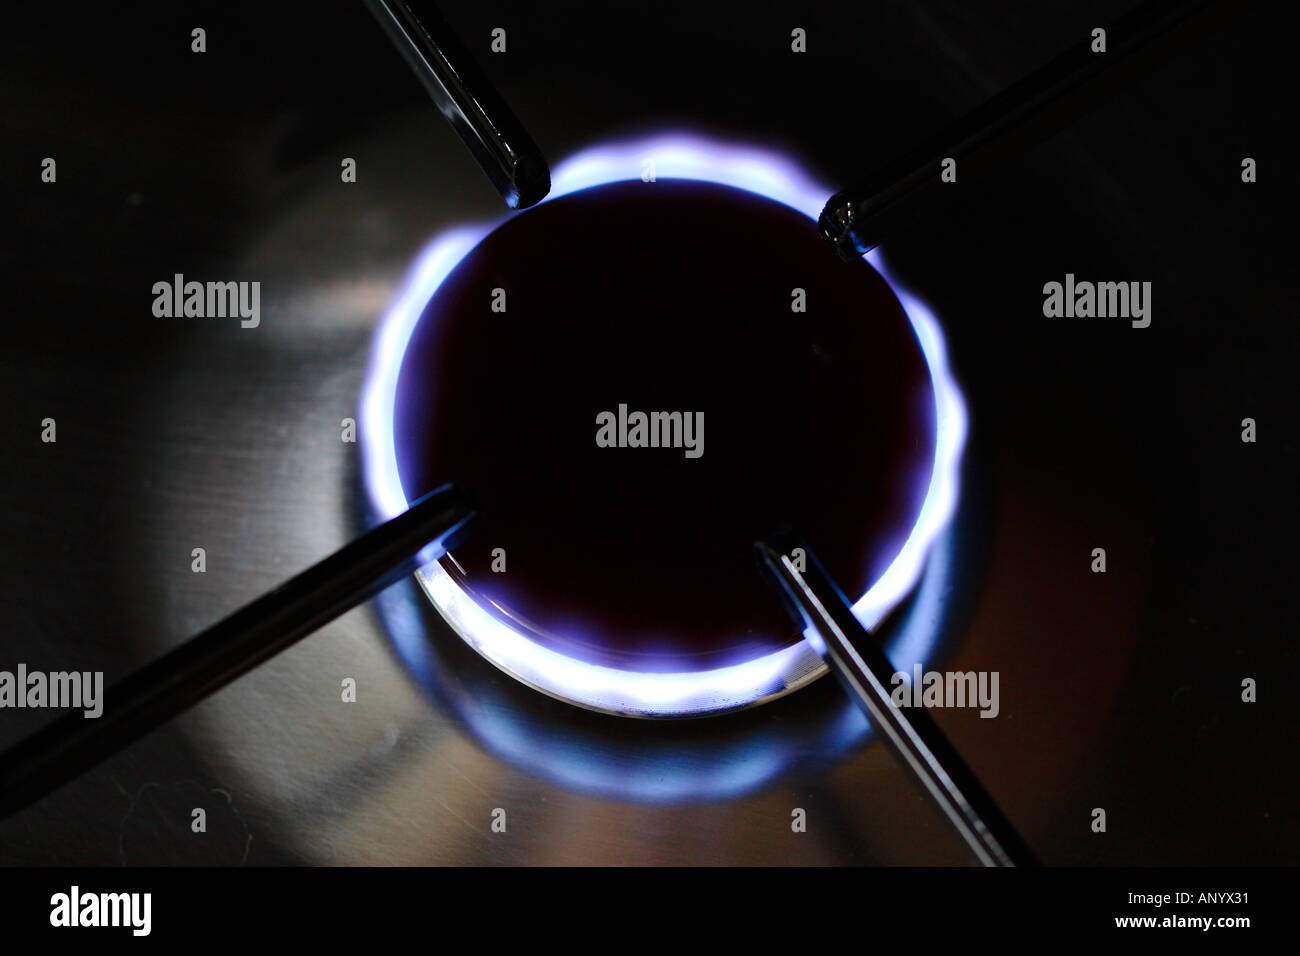 Cocinar a fuego lento fotografías e imágenes de alta resolución - Alamy